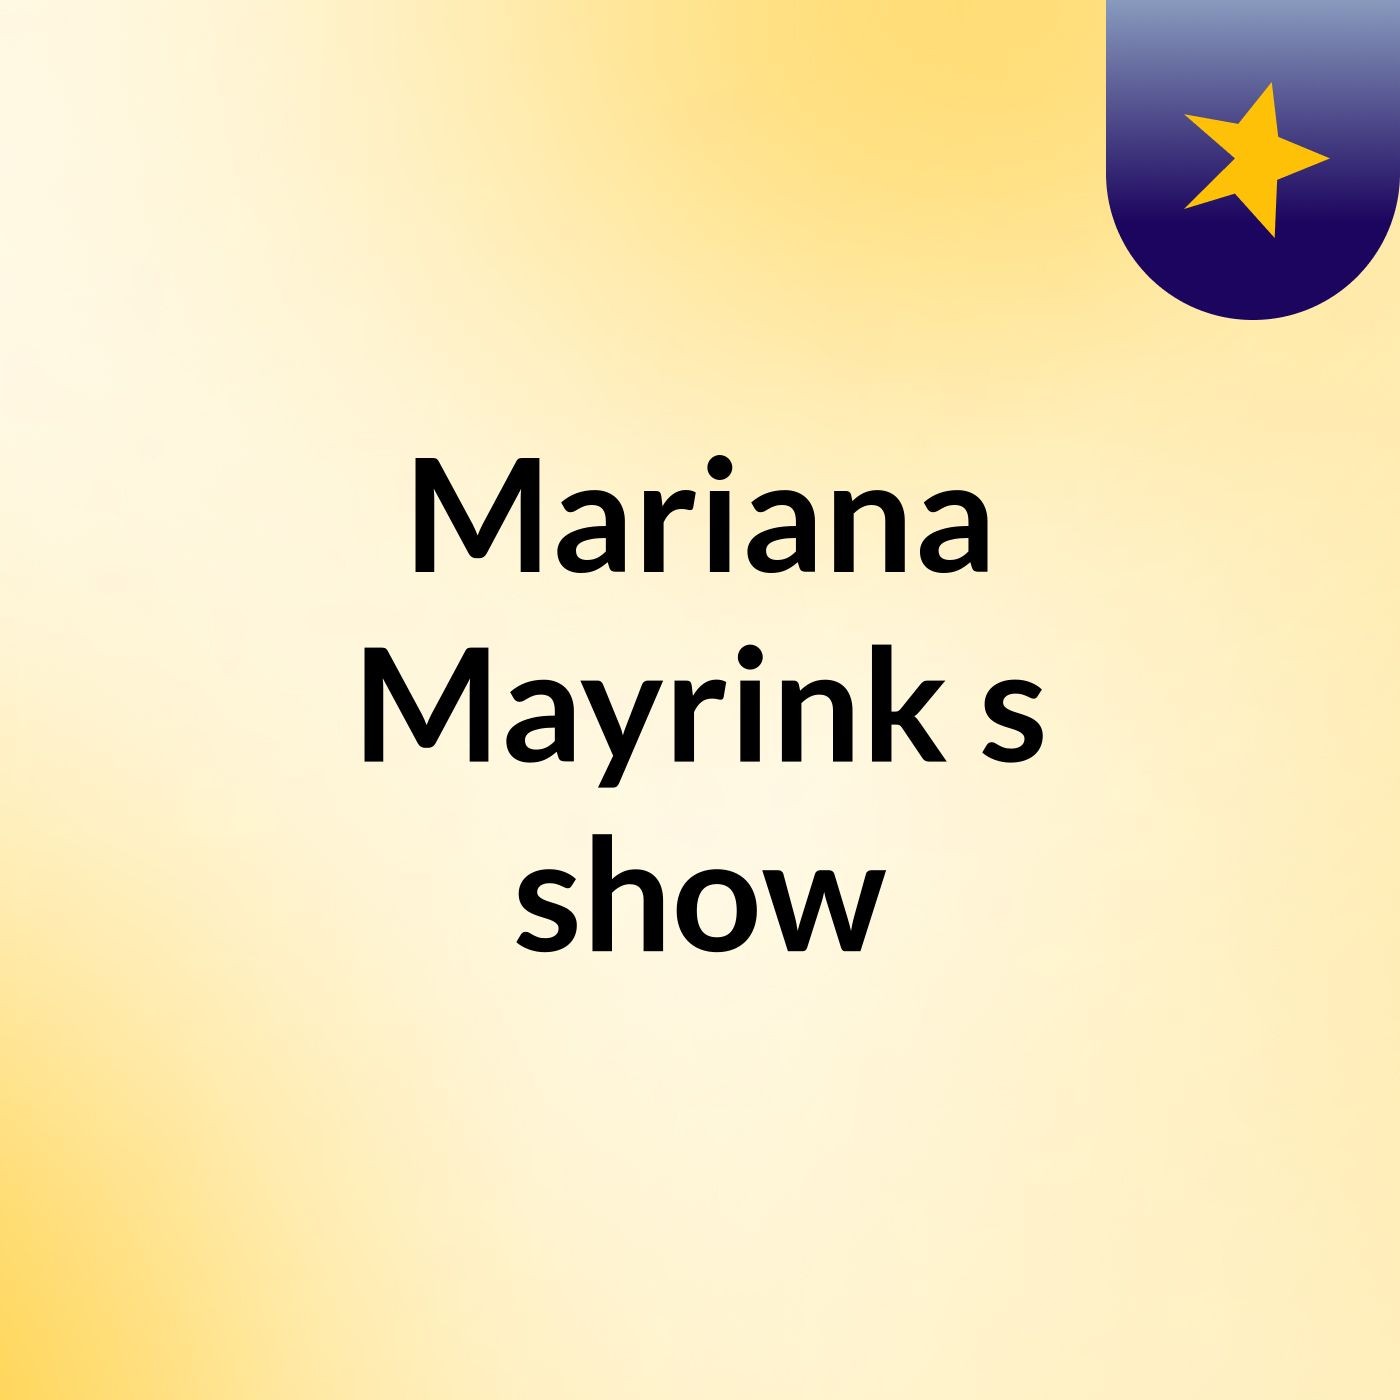 Mariana Mayrink's show